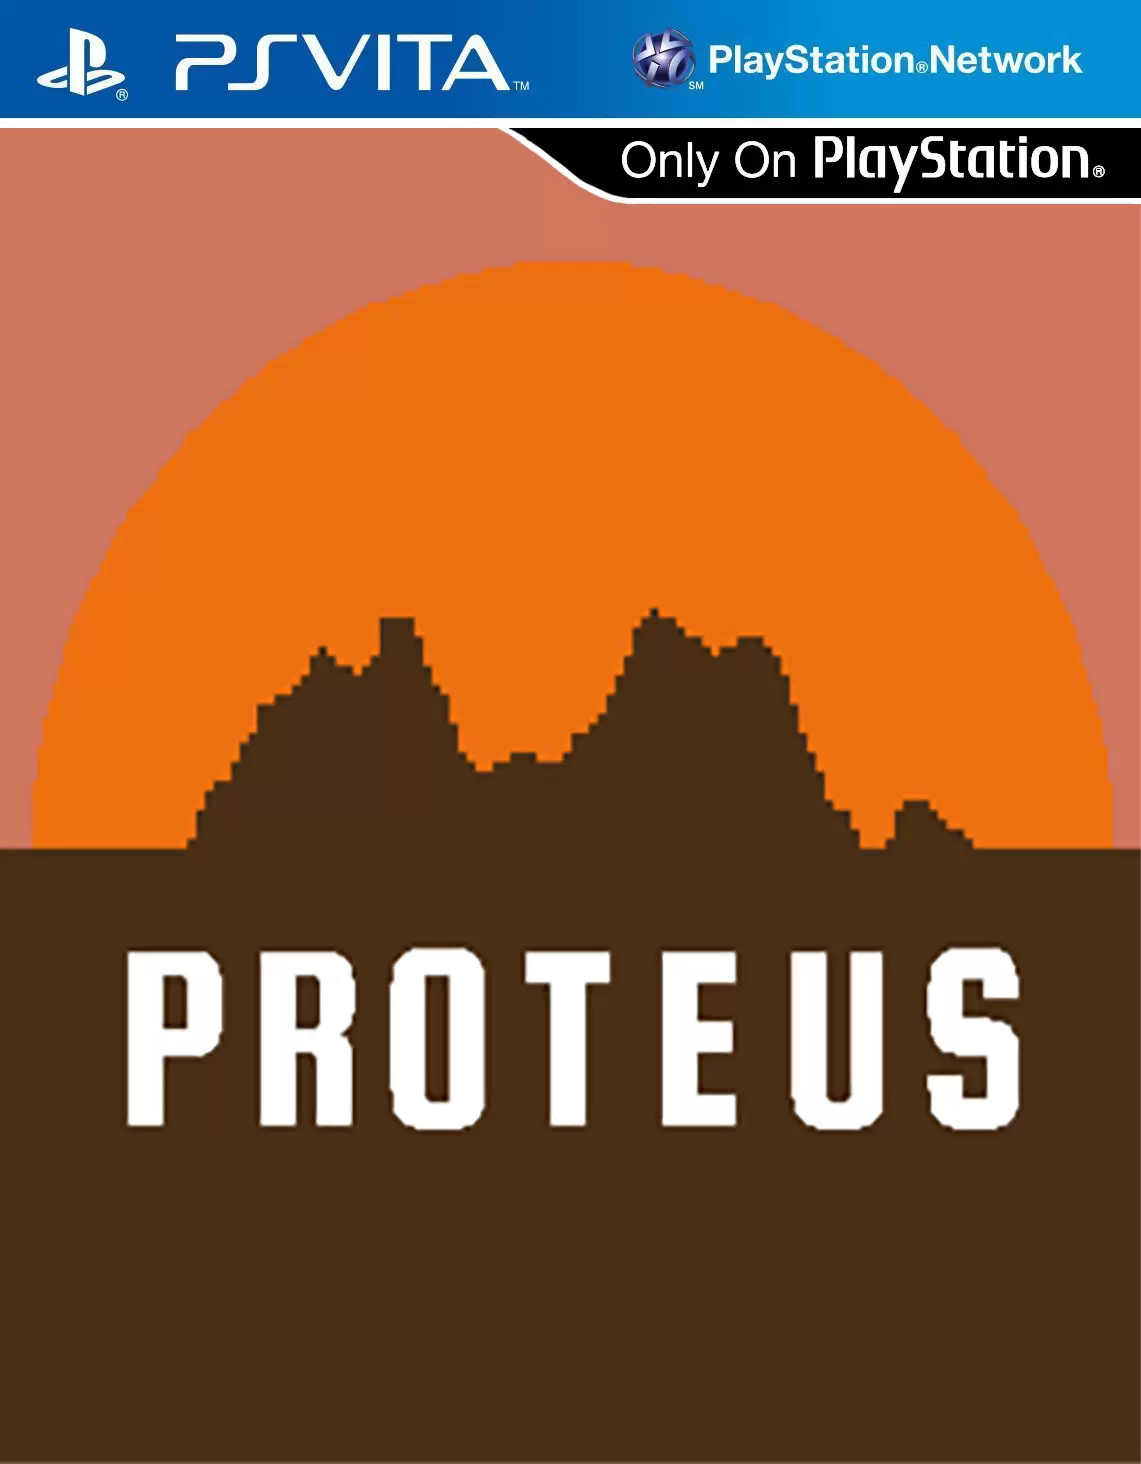 PS Vita Games - Proteus